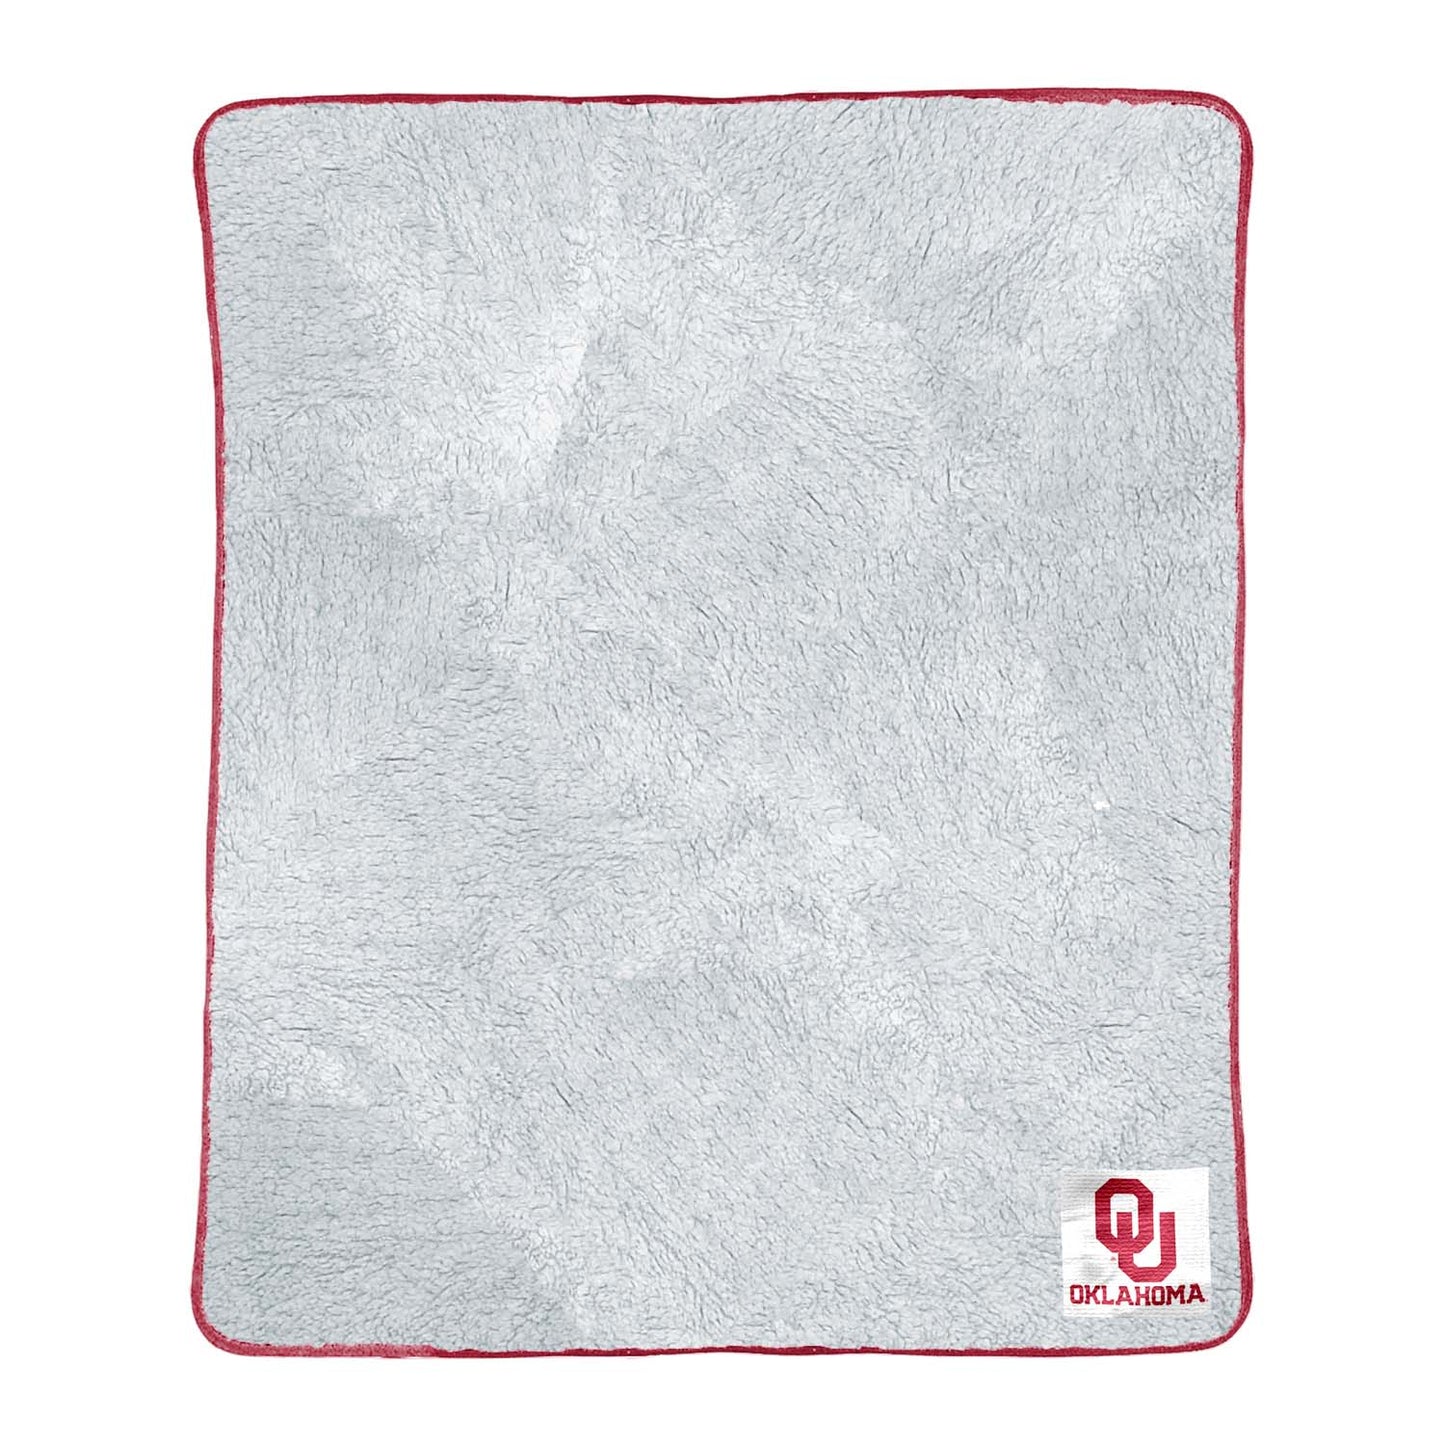 Oklahoma Sooners NCAA Silk Sherpa College Throw Blanket - Red